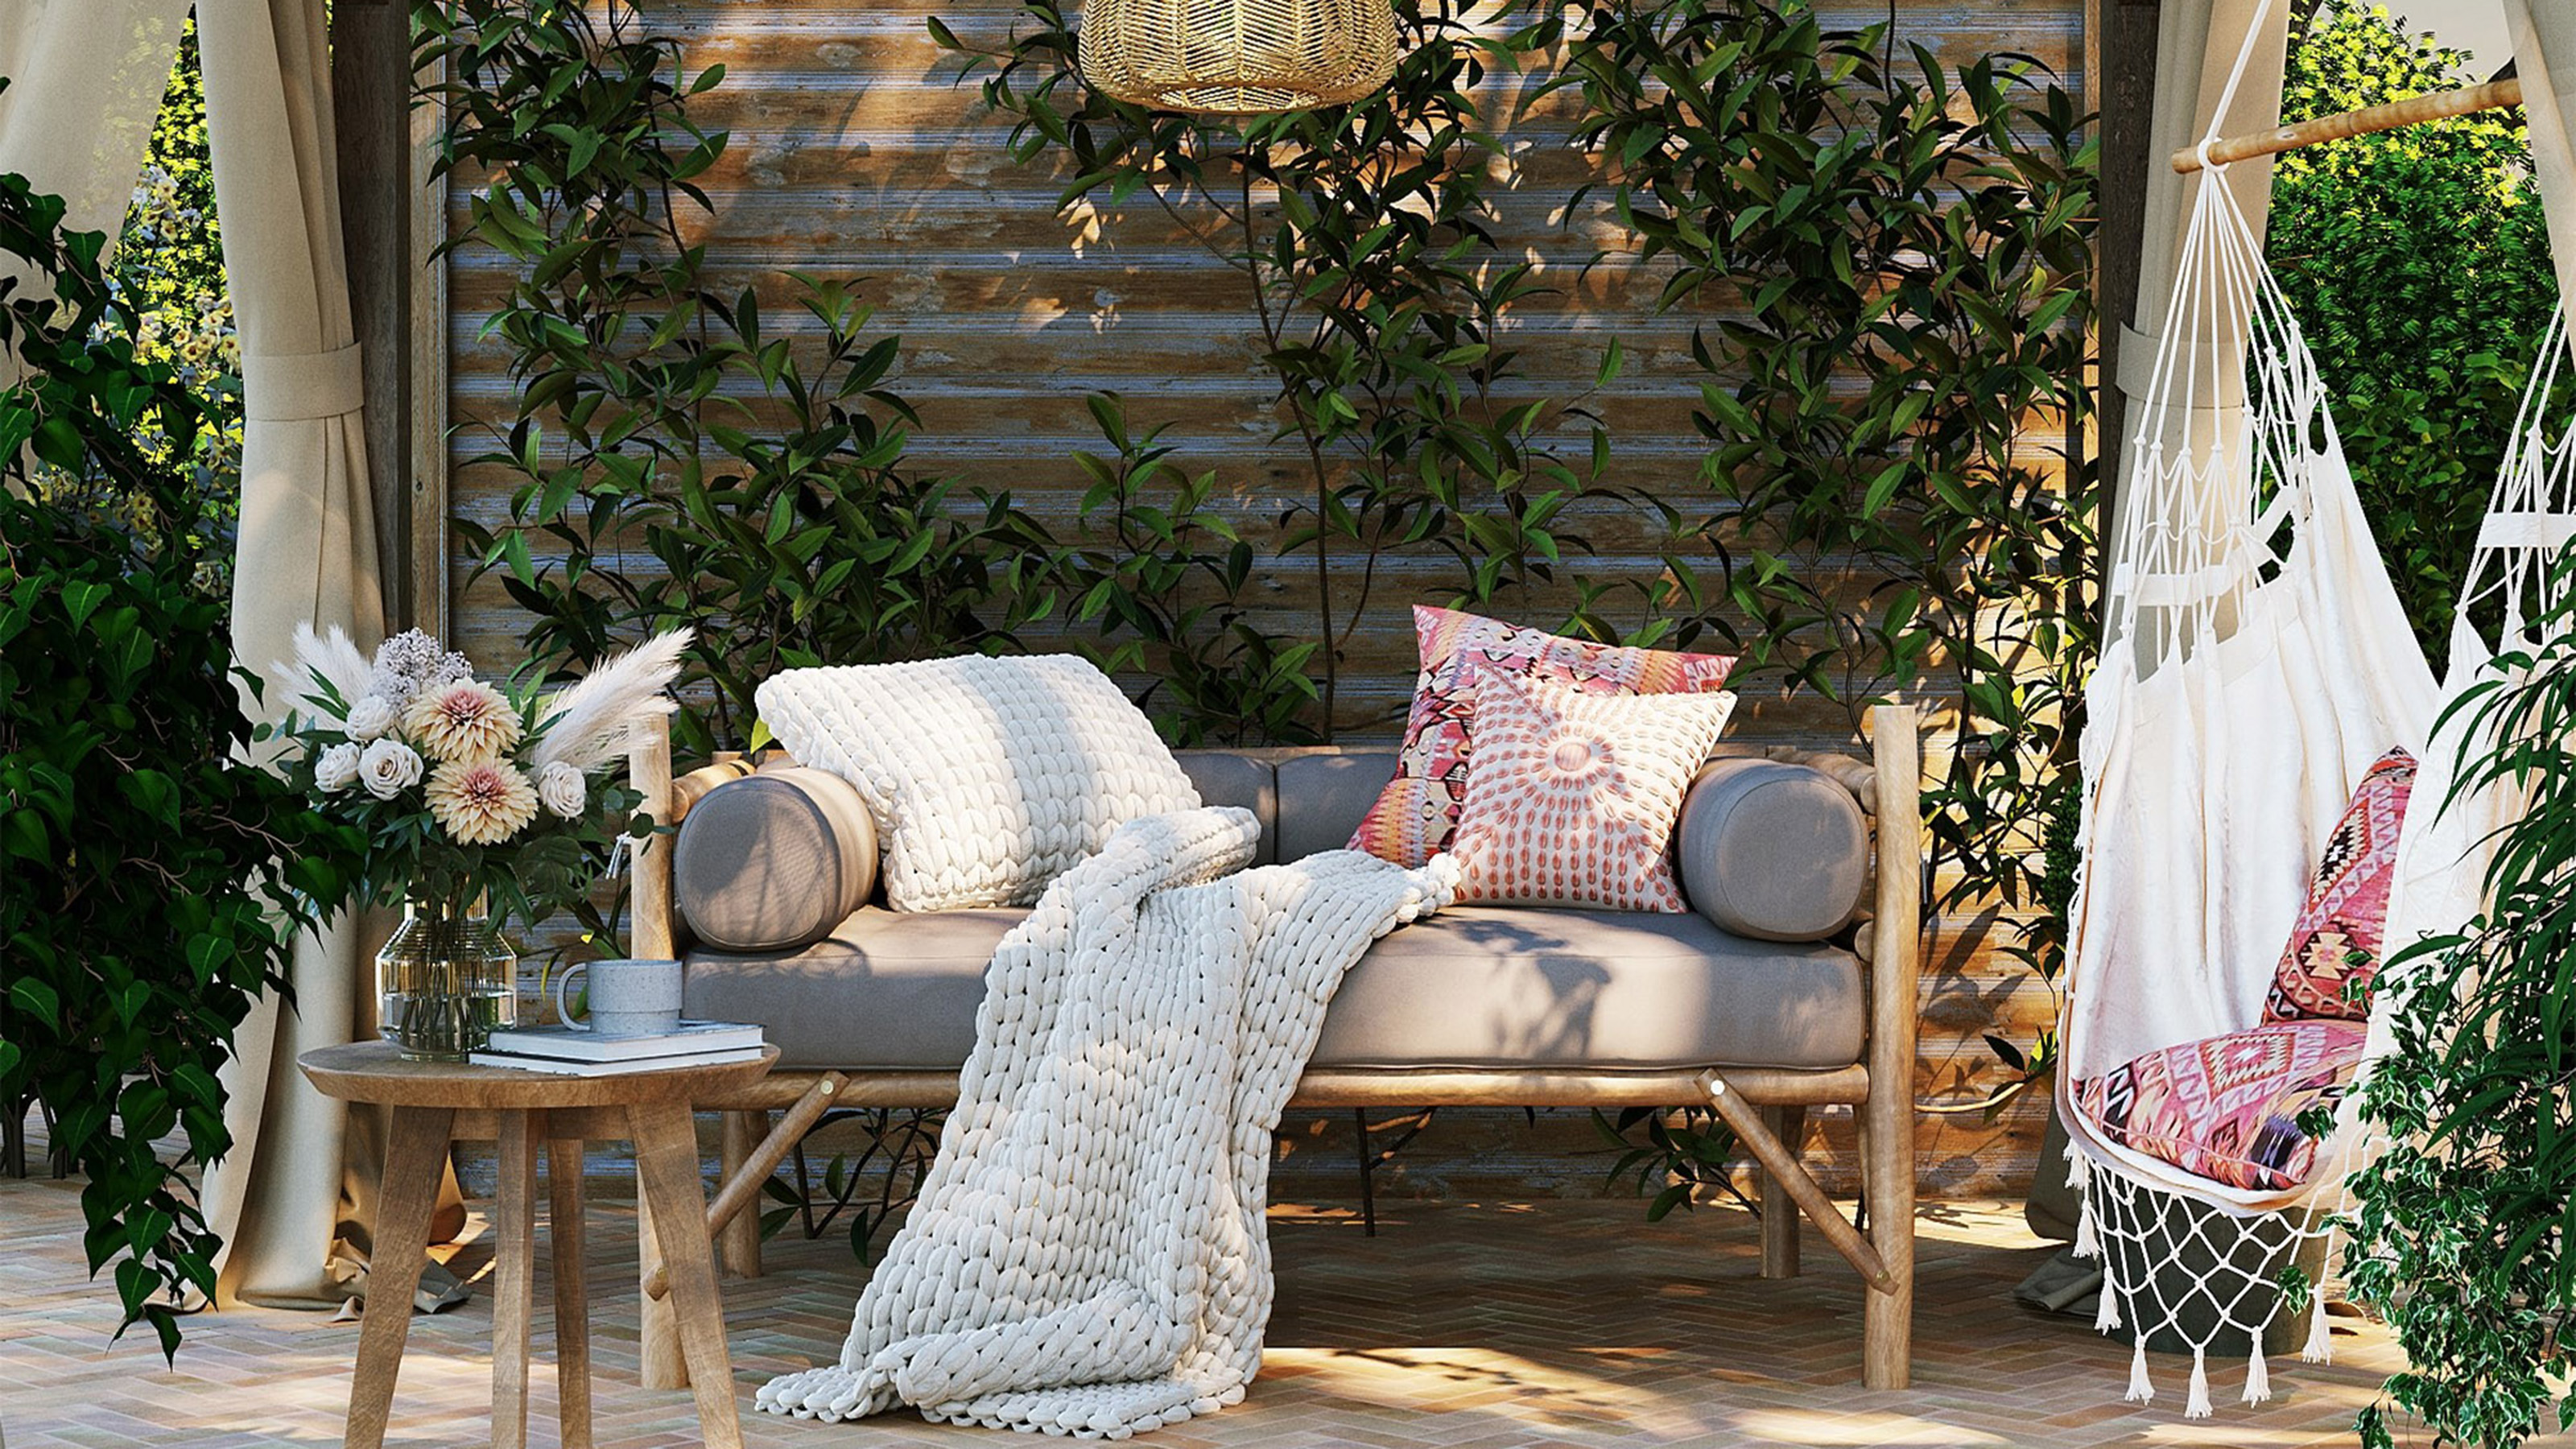 Patio Decor Ideas: 16 Ways To Spruce Up Your Outdoor Space | Gardeningetc